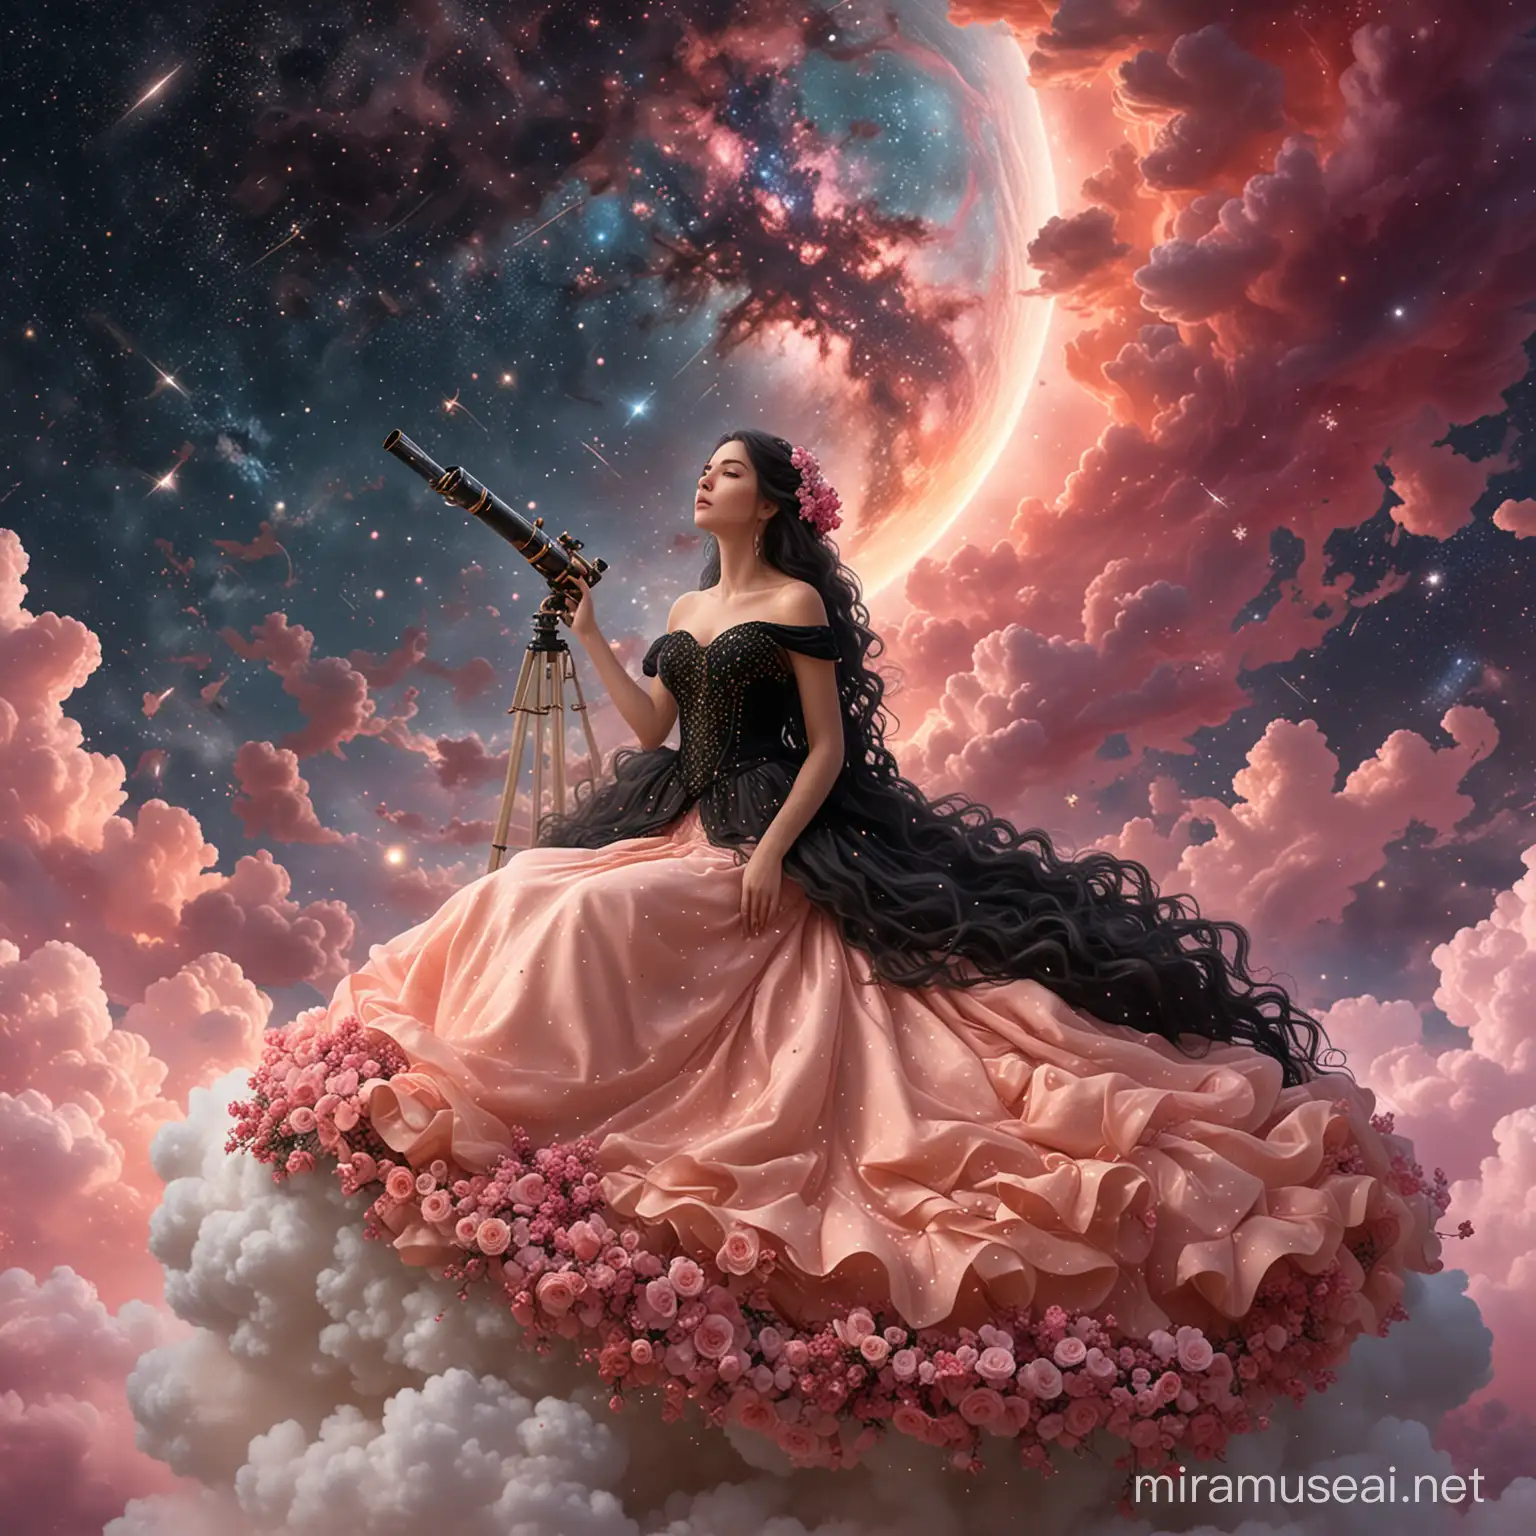 Elegant Woman on Cloud Observing Celestial Beauty with Telescope